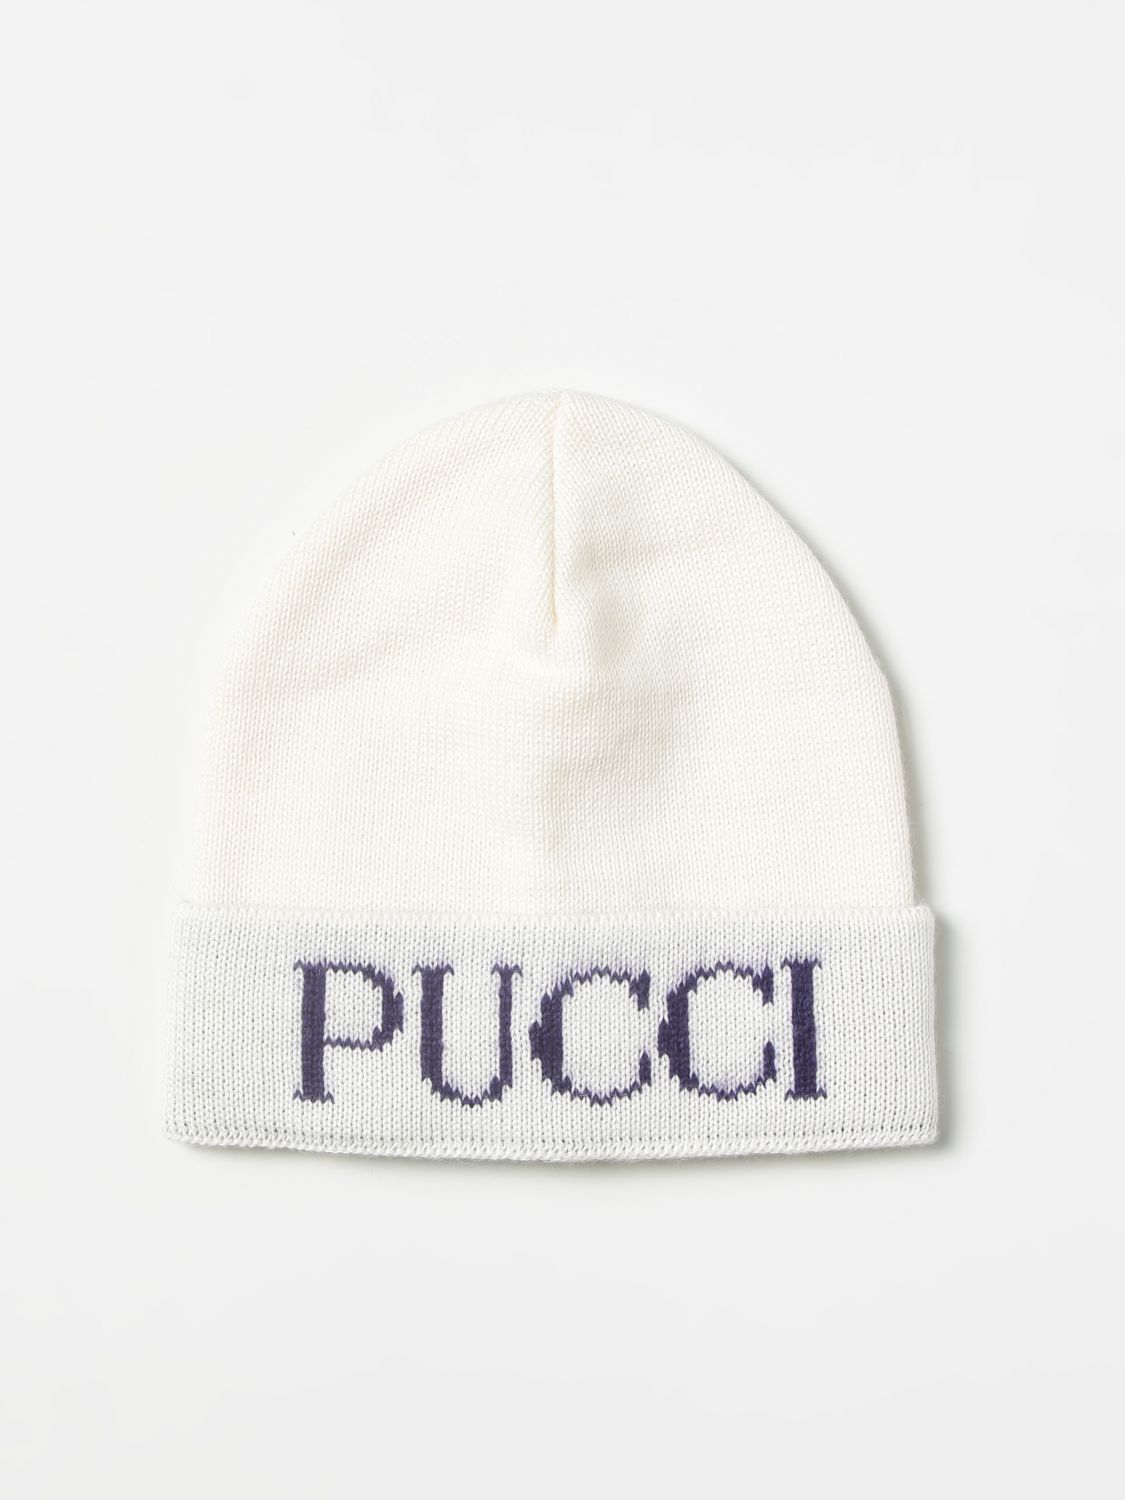 Girls' hats Emilio Pucci: Girls' hats kids Emilio Pucci ivory 1